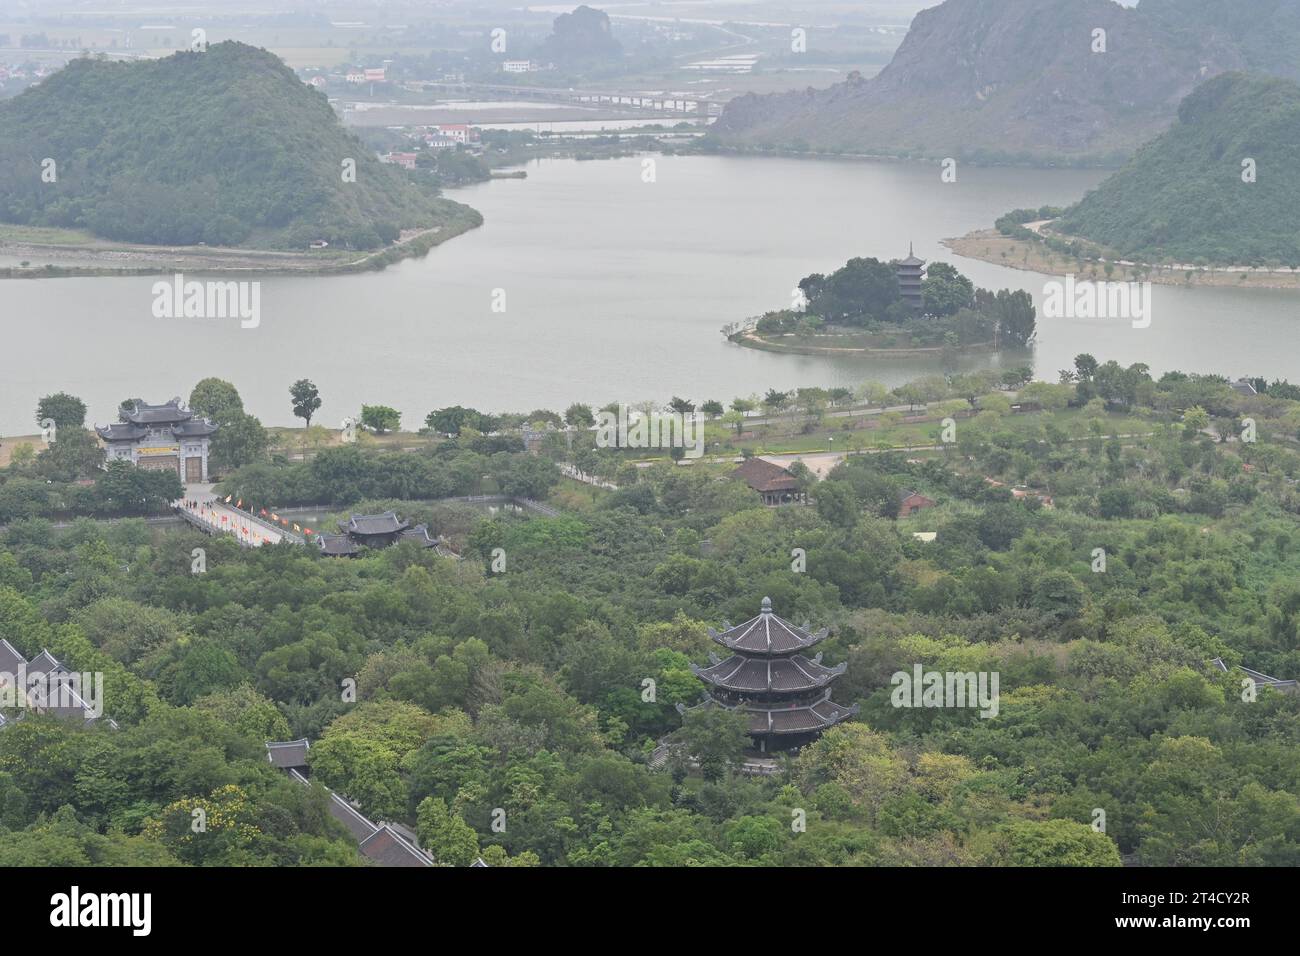 Aerial view of Bai Dinh Pagoda, a Buddhist temple complex located on Bai Dinh Mountain near Ninh Binh, Vietnam Stock Photo